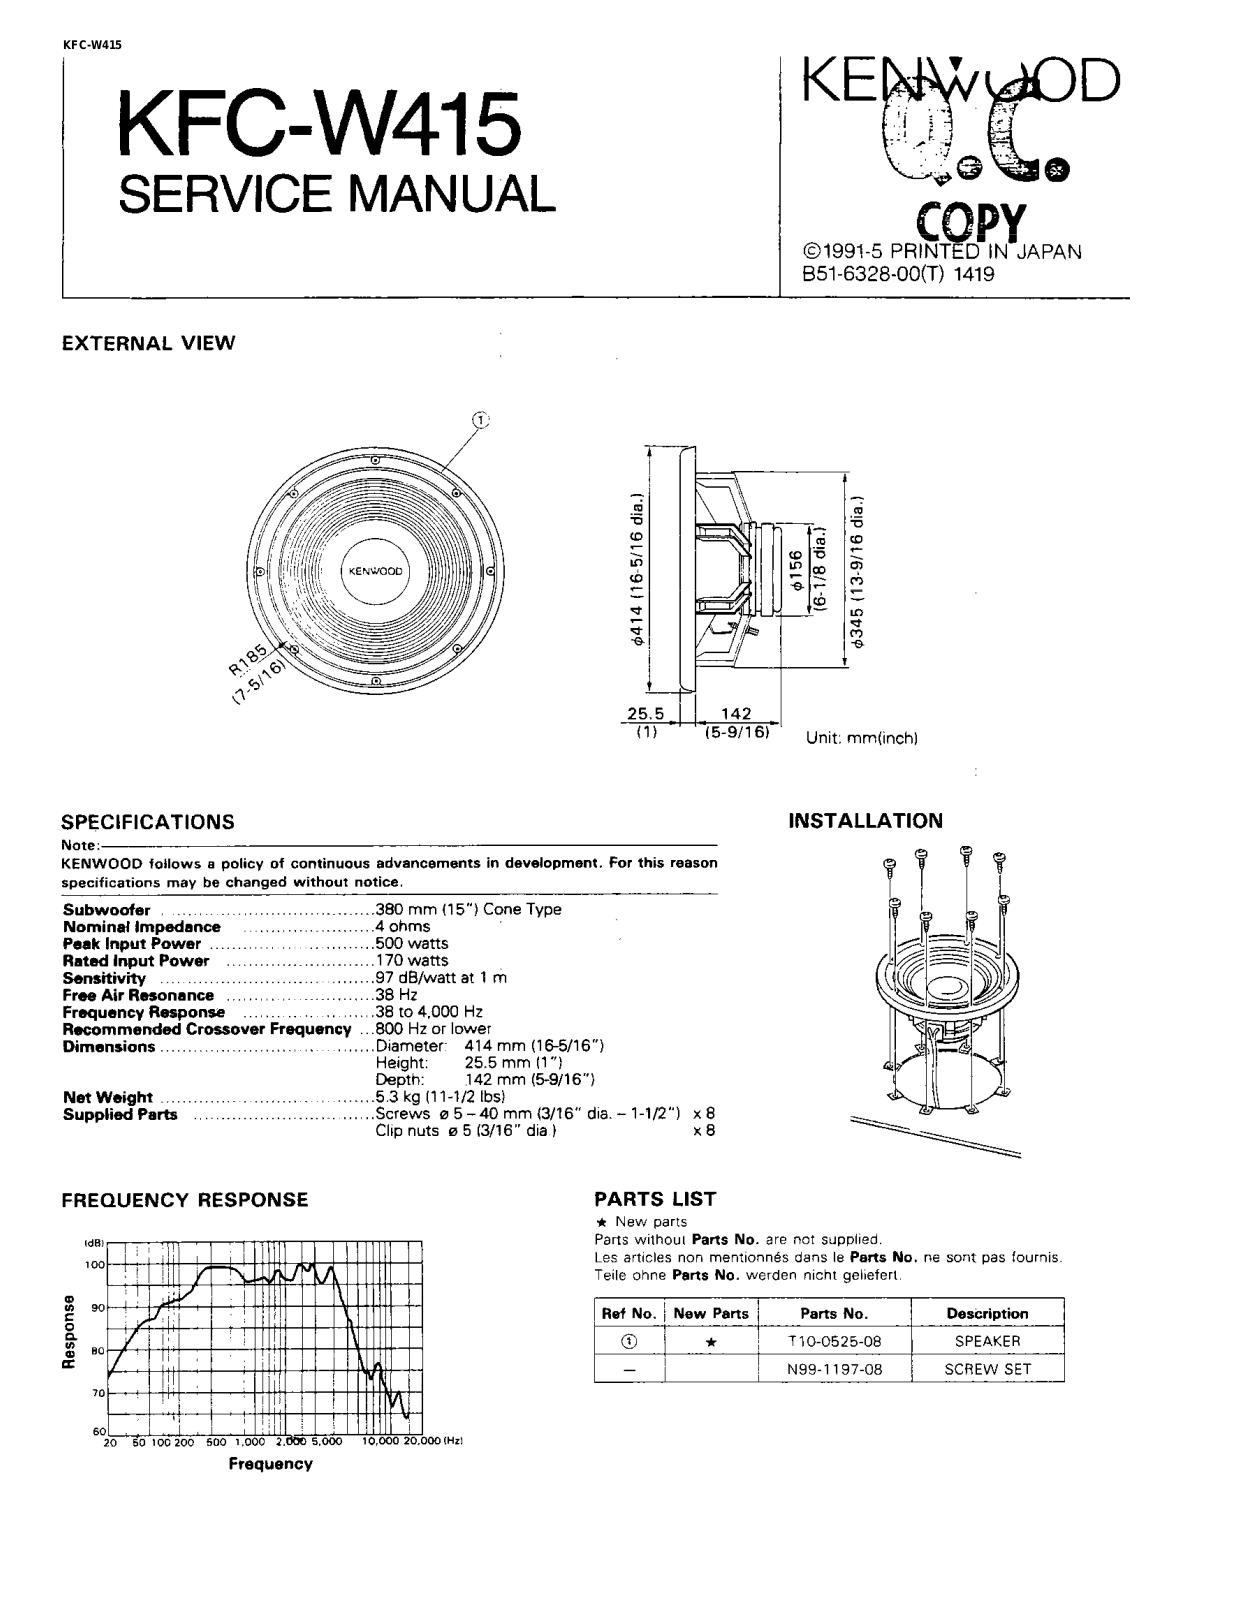 Kenwood KFC-W415 Service Manual